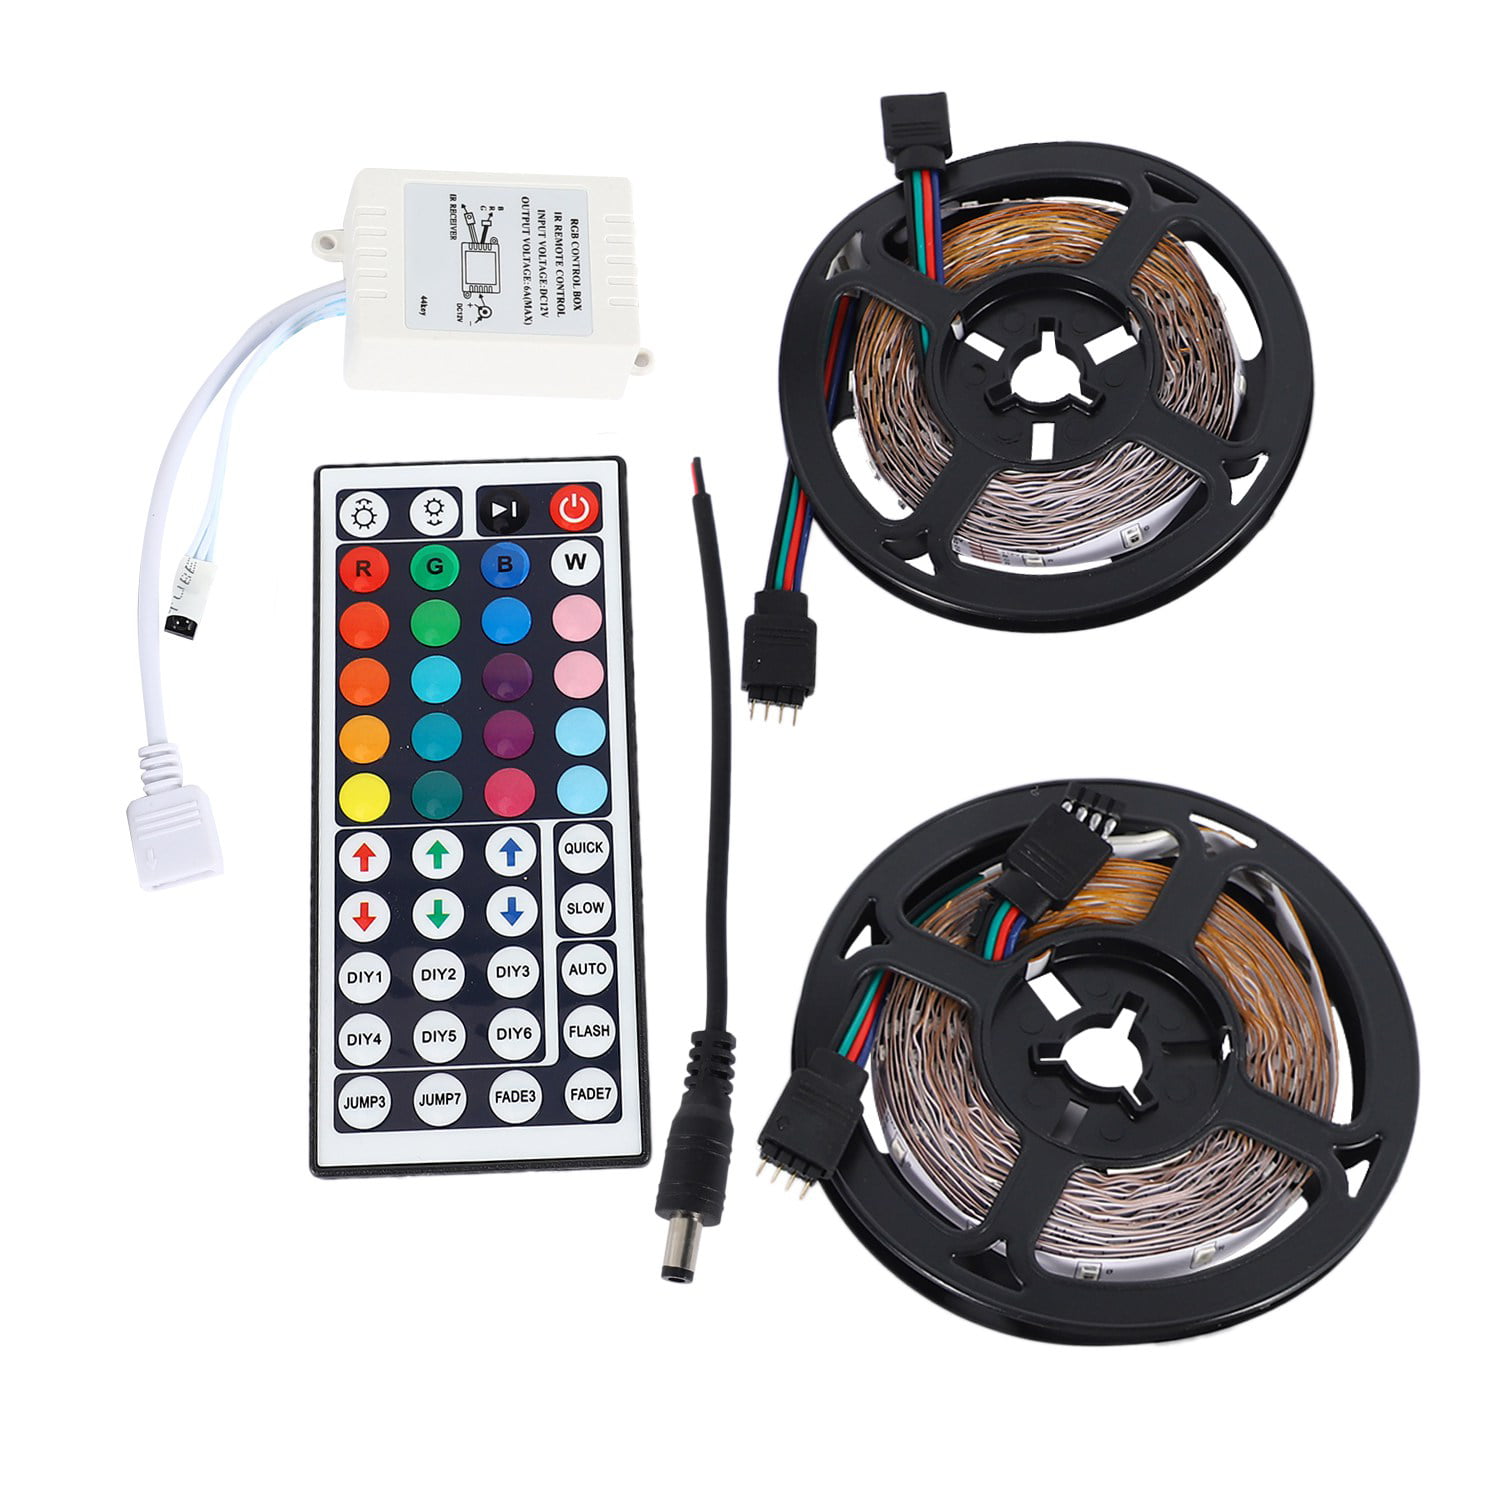 44 Key IR Remote Controller 10M 3528 SMD RGB Flexible LED Light Strip 600LEDs 